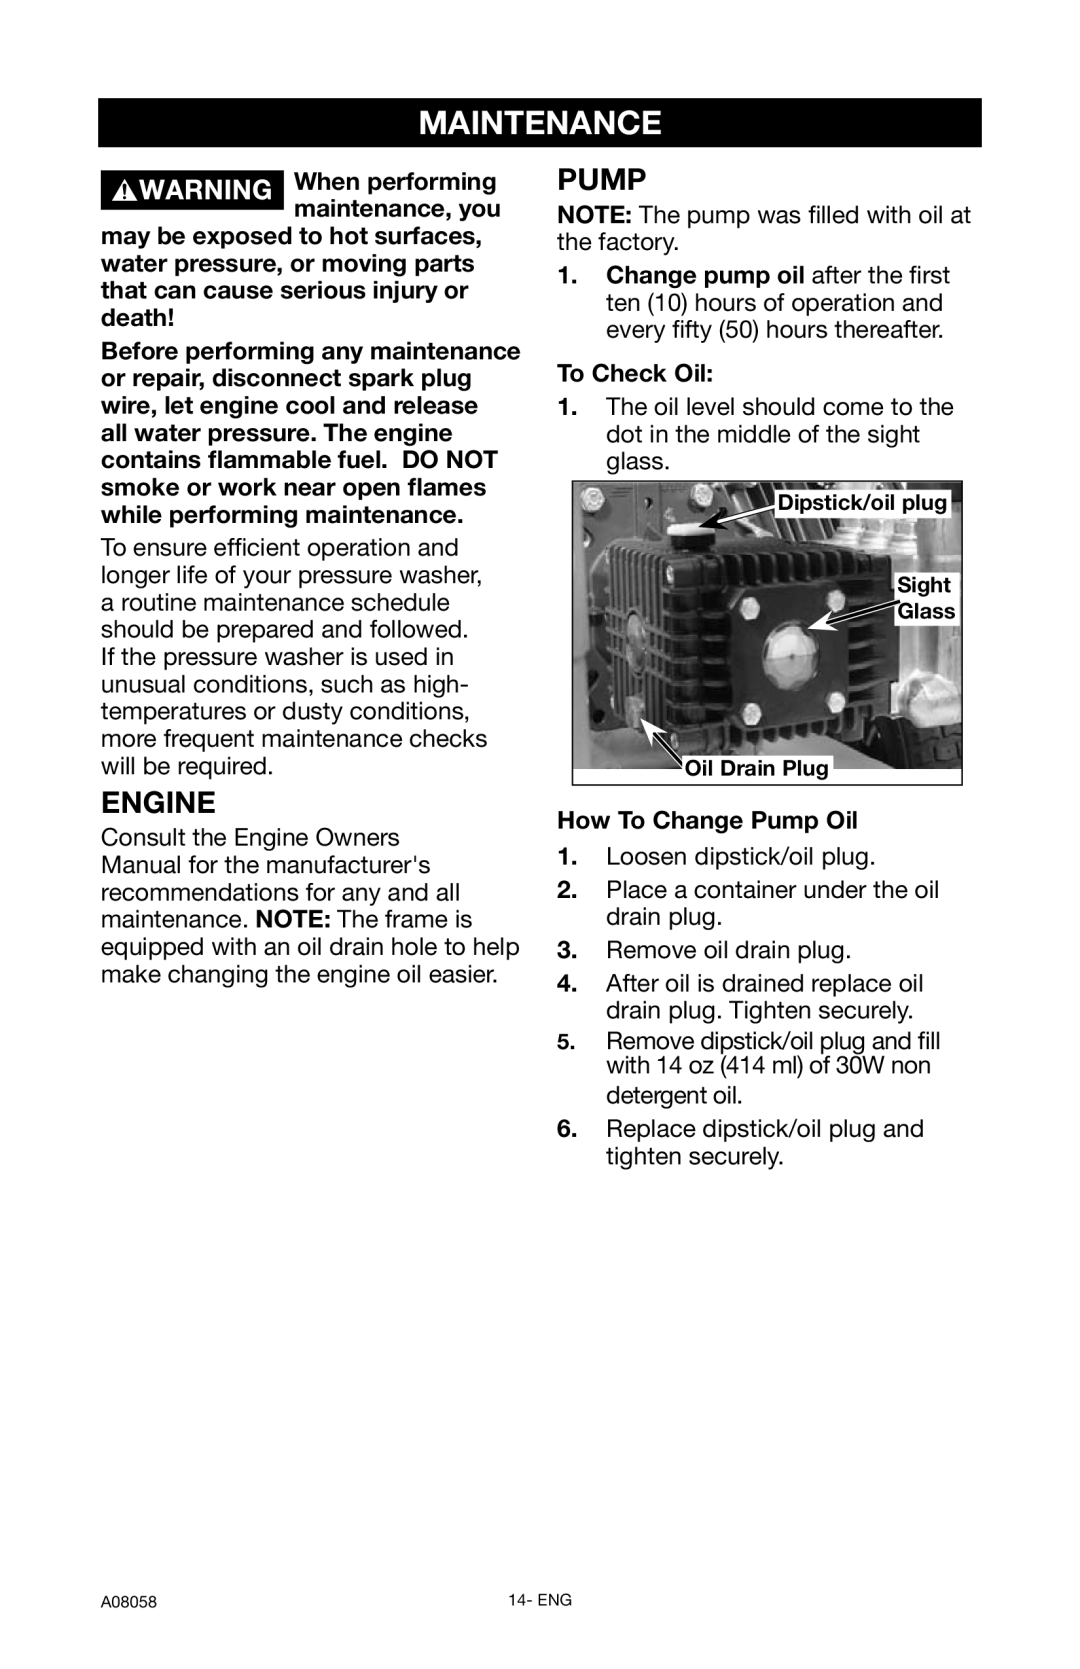 Porter-Cable PCH3740, A08058-0412-0 instruction manual Maintenance, Engine, Pump 